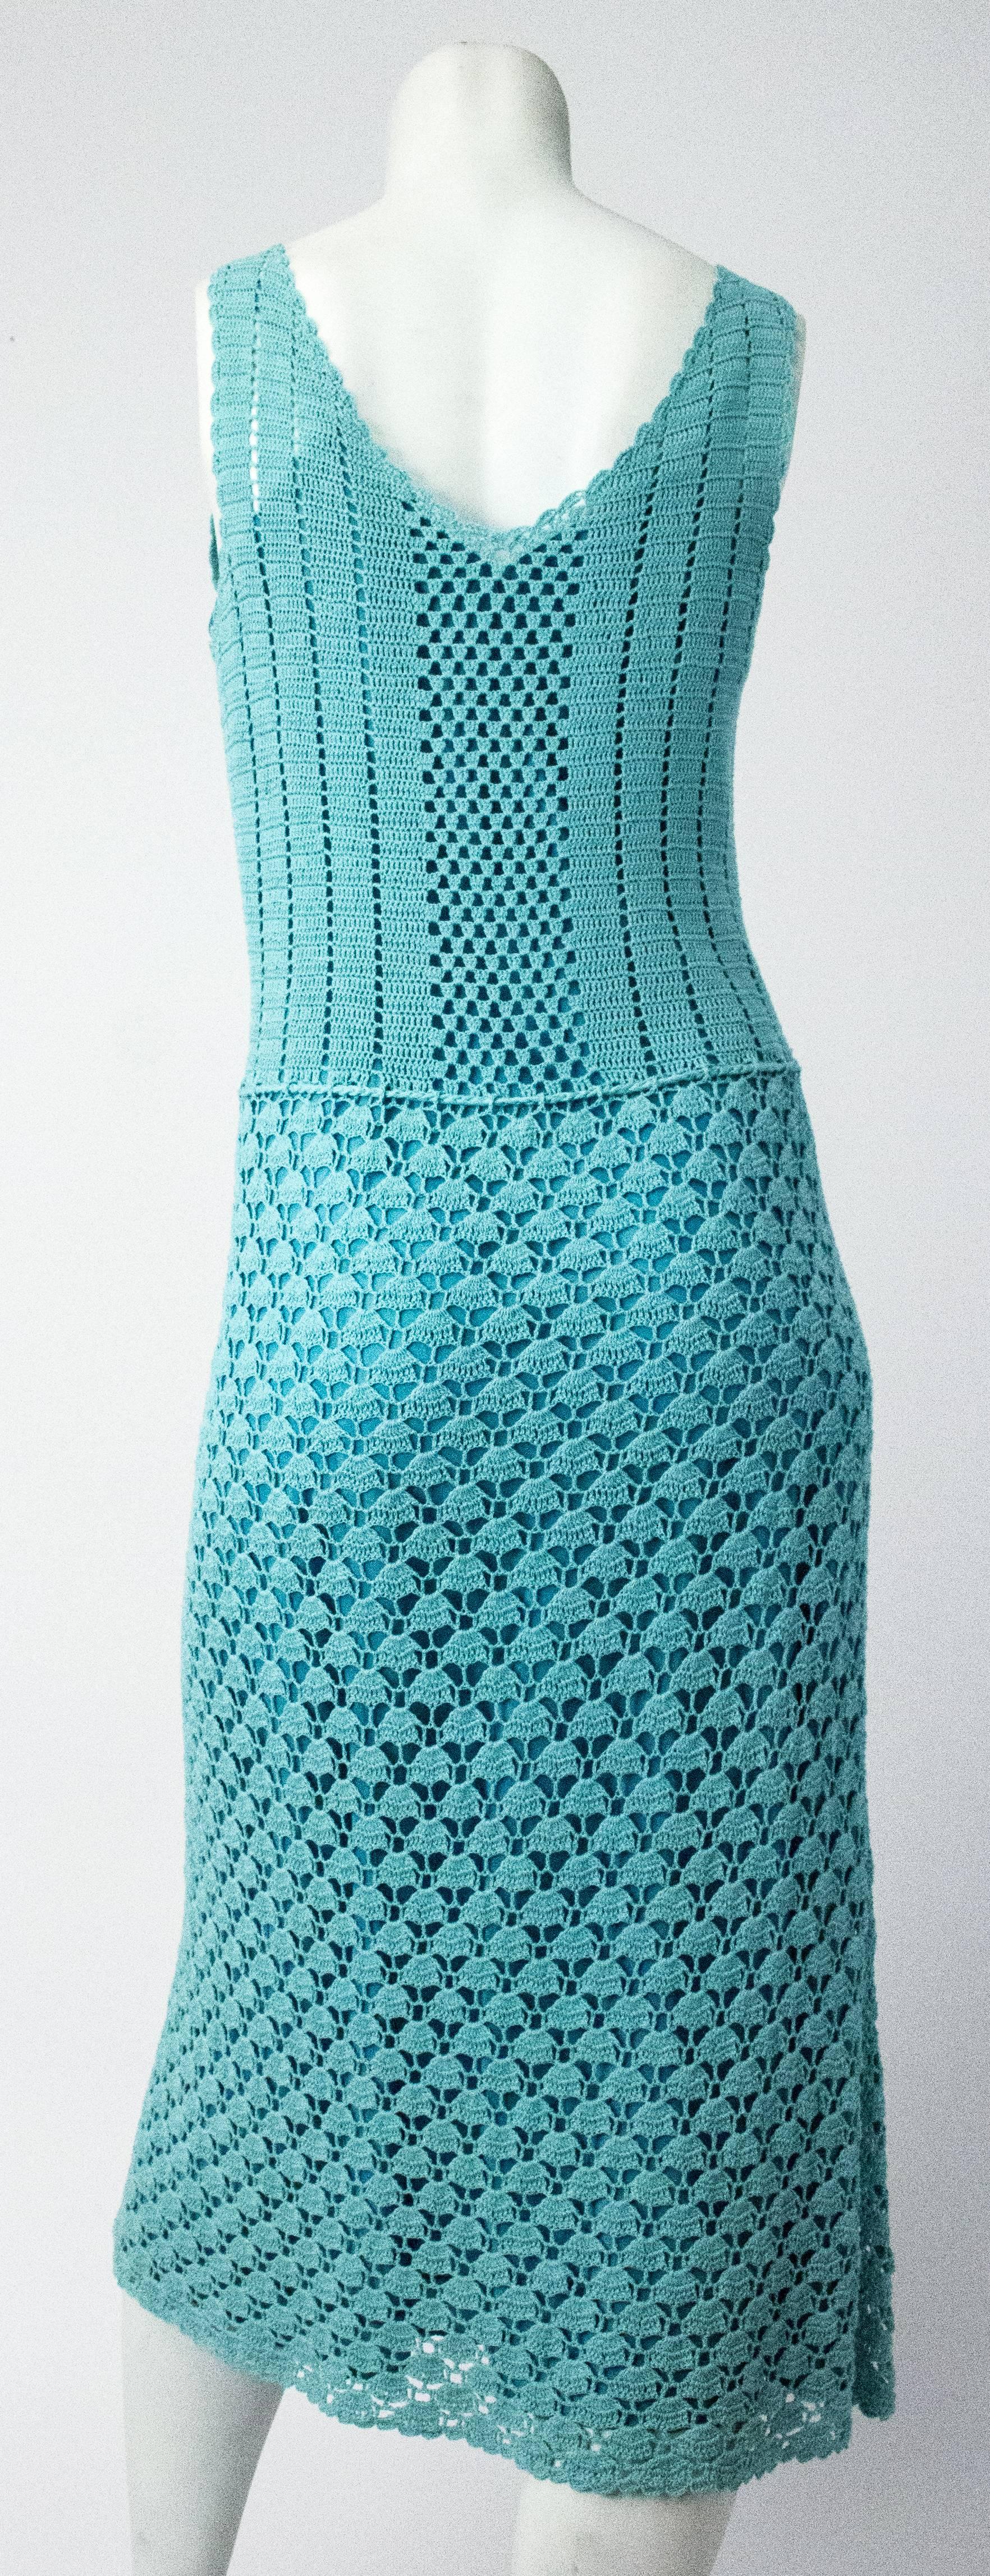 70s Aqua Blue Crochet Ärmelloses Kleid mit Slip. Passende Original-Taillenkrawatte. 